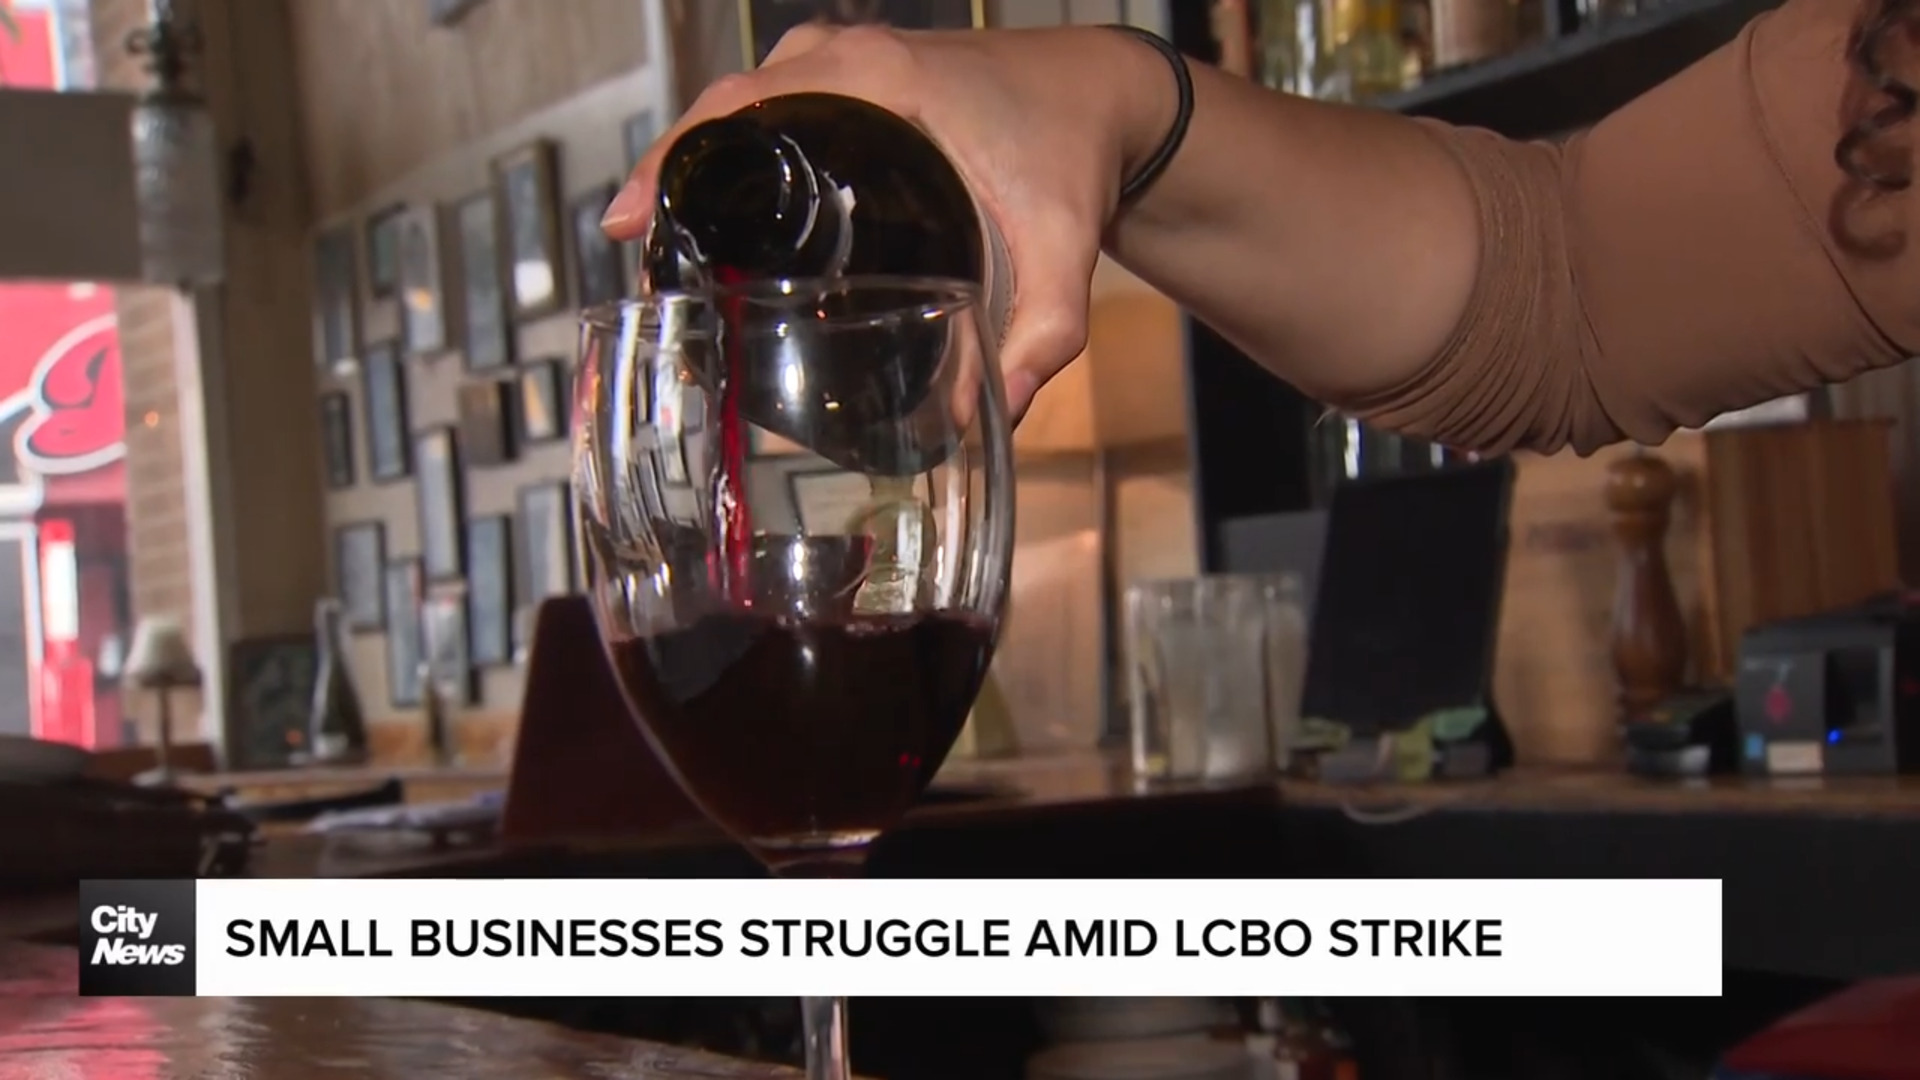 Small businesses struggle amid LCBO strike